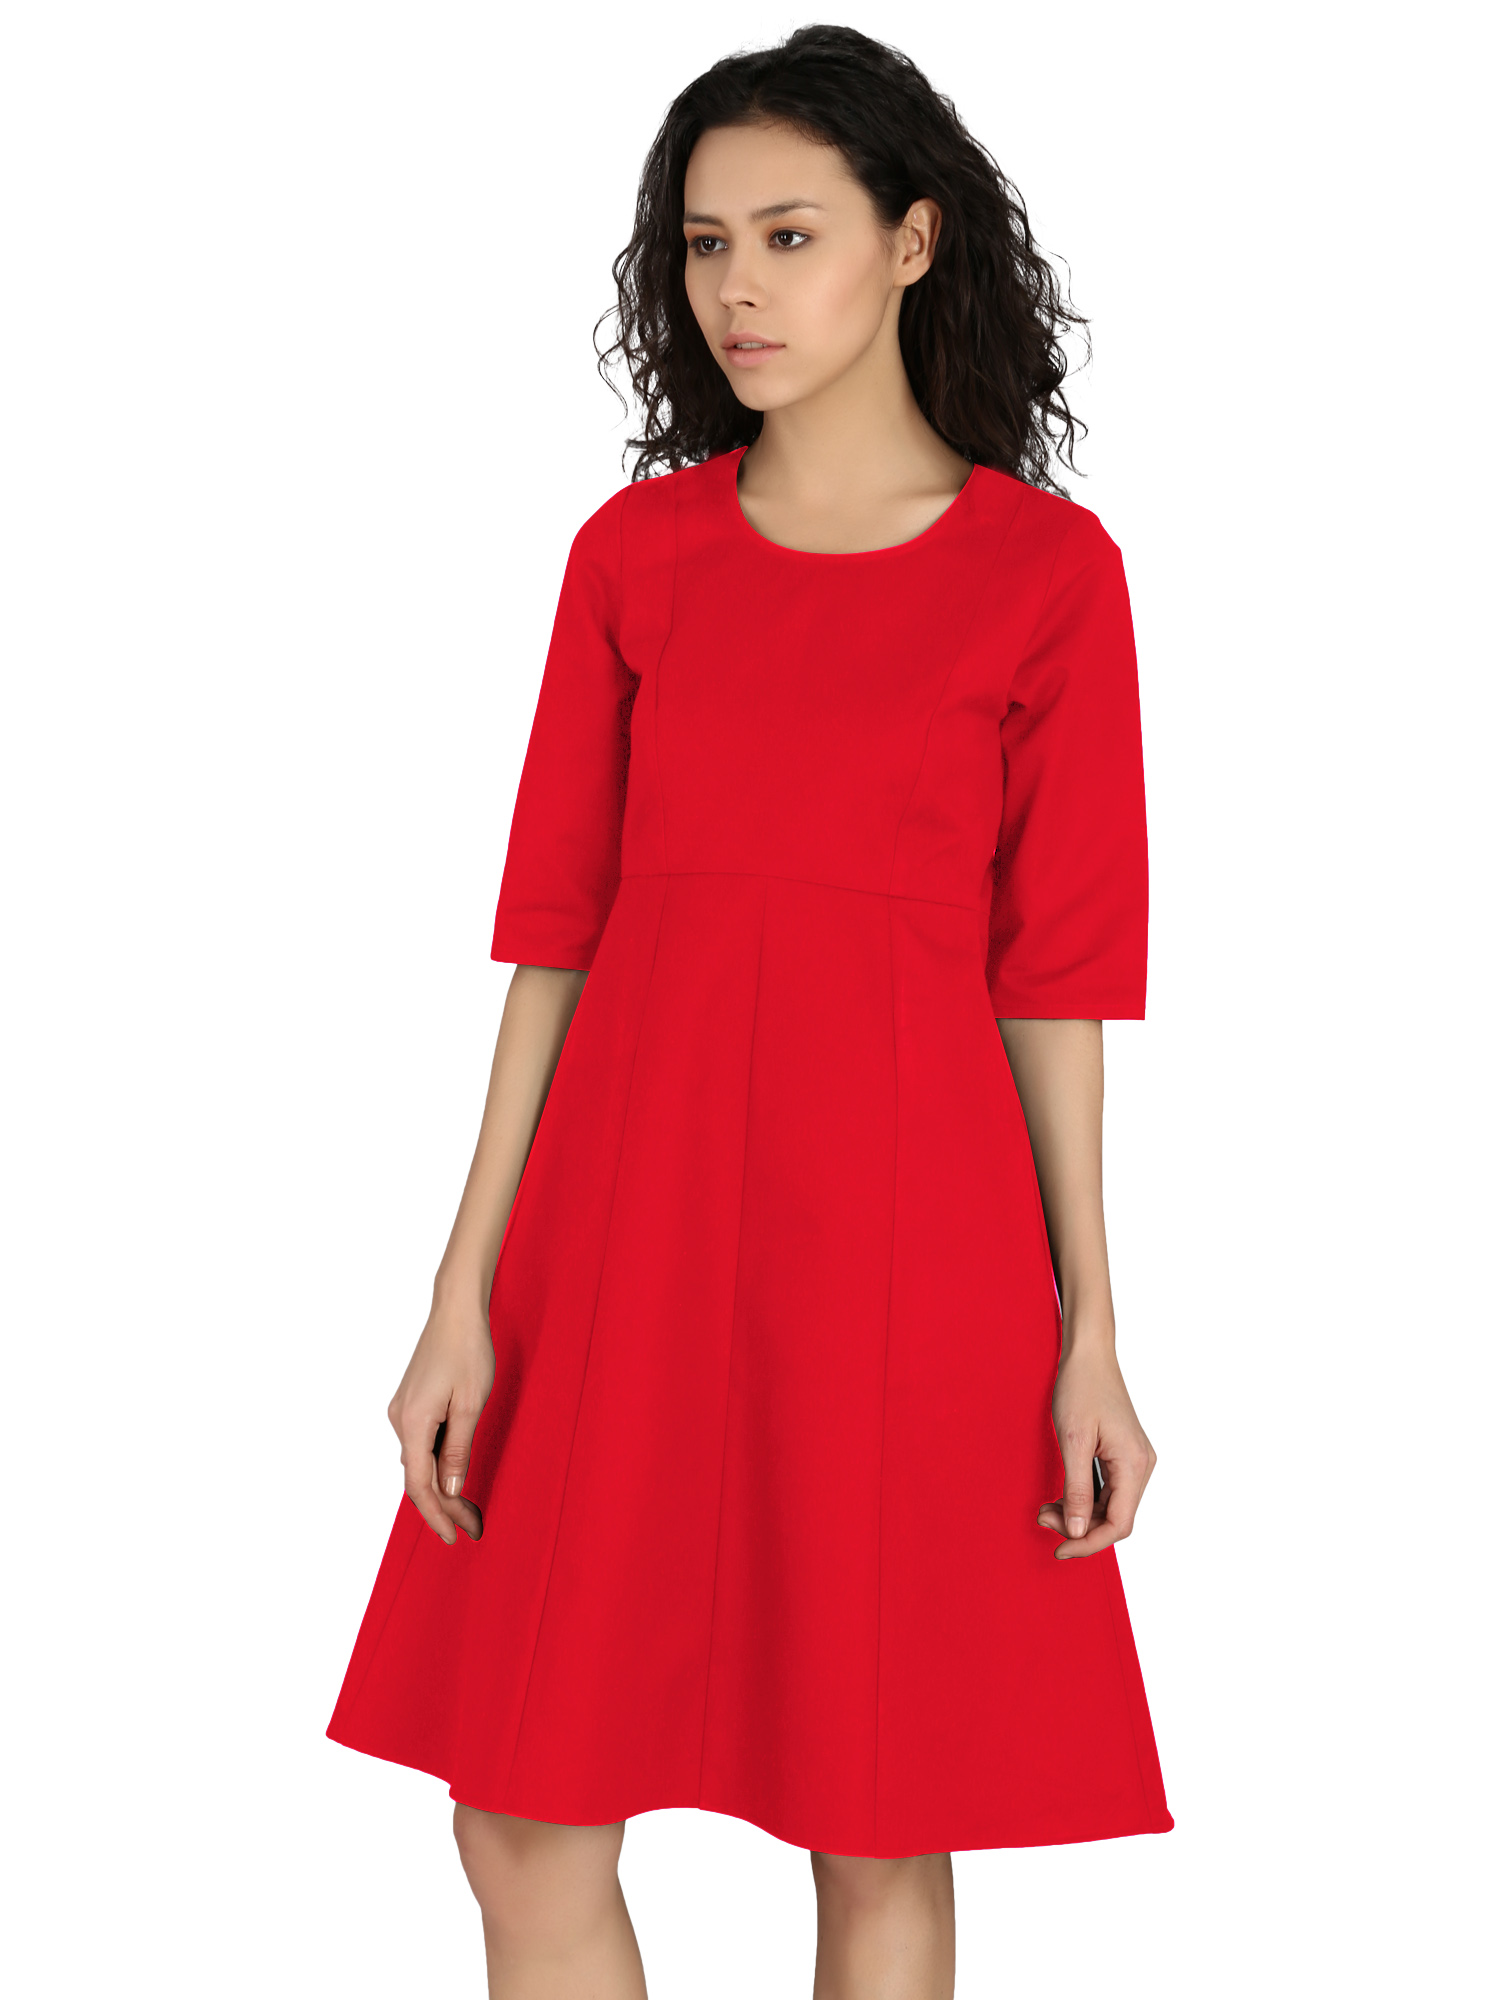 Fitted Sleeve Sheath Work Wear Dress Red -2